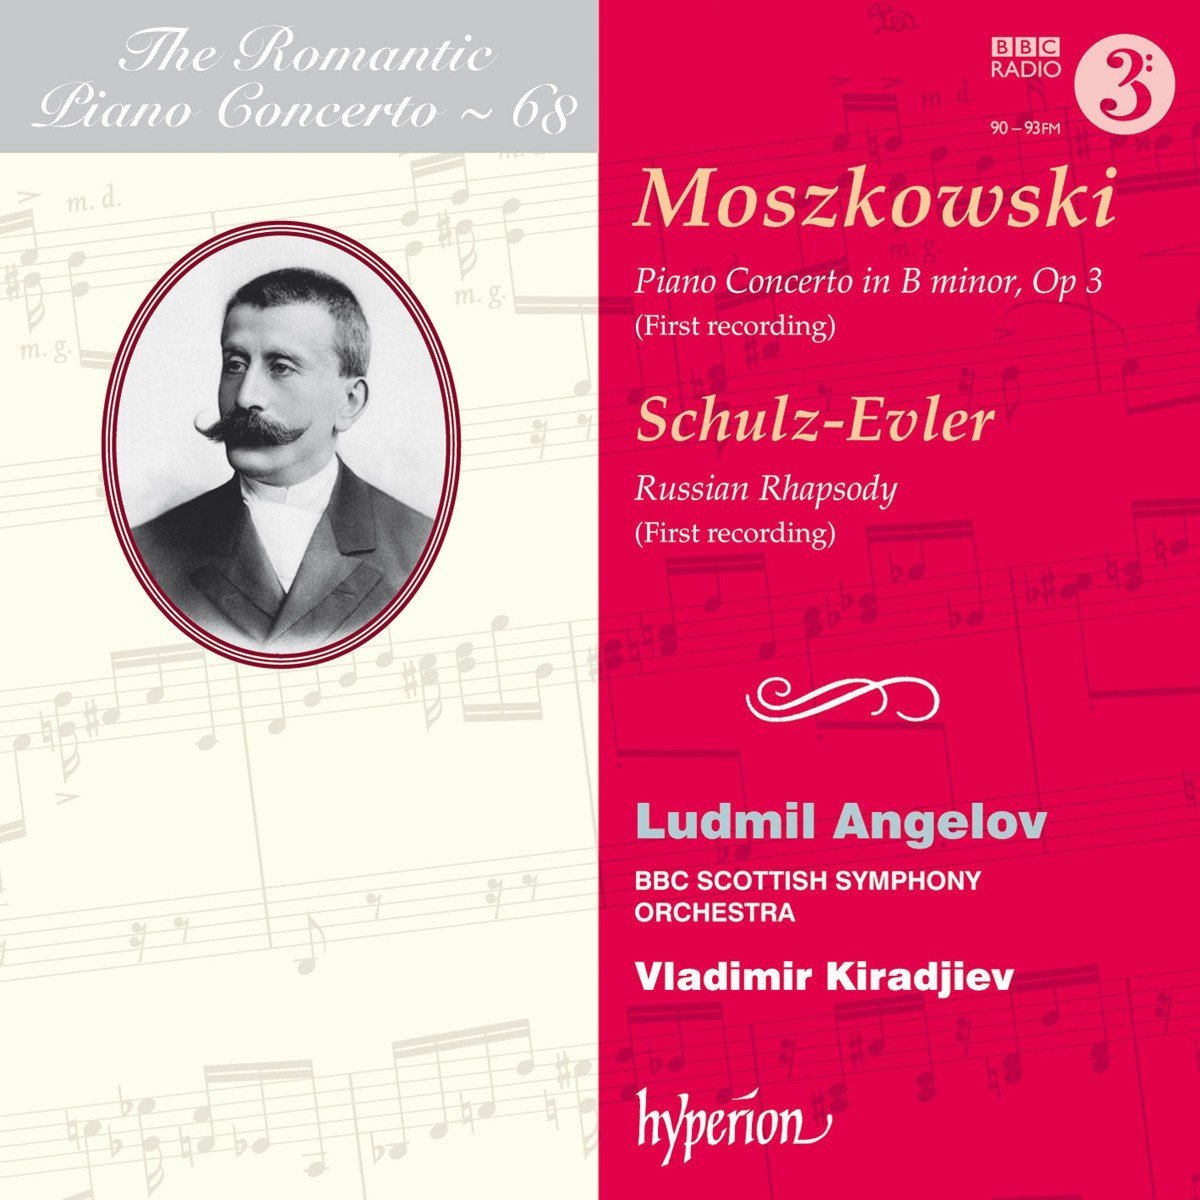 Ludmil Angelov, BBC Scottish Symphony Orchestra, Vladimir Kiradjiev - Moszkowski: The Romantic Piano Concerto 68 (2016) [Hyperion FLAC 24bit/96kHz]